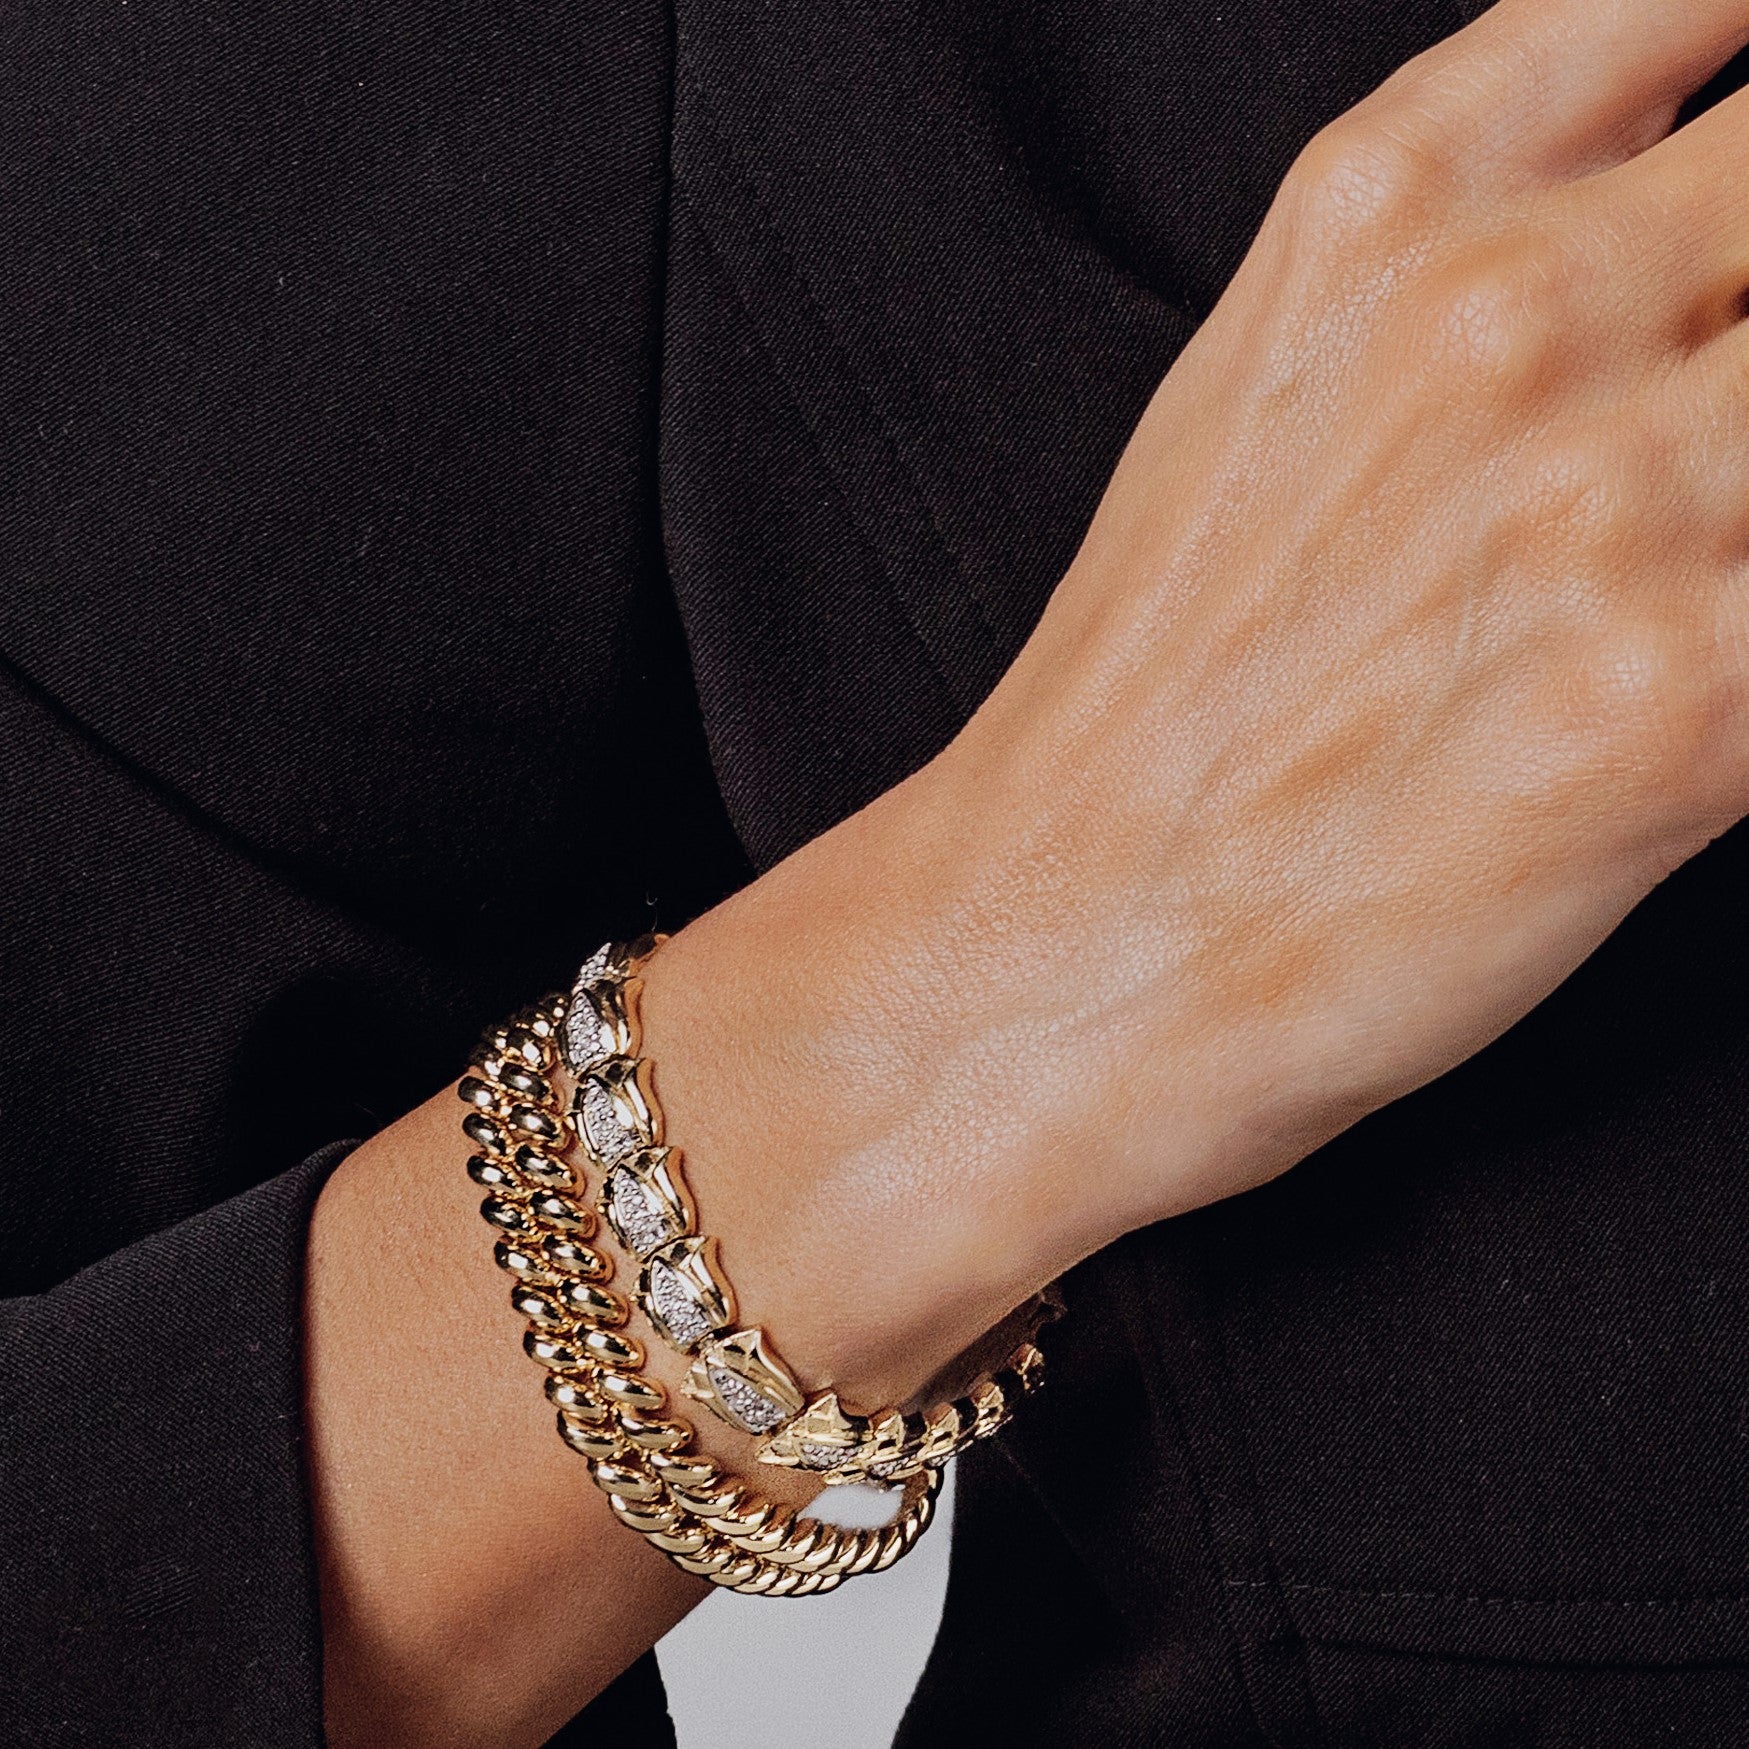 San Marco and lotus bracelets worn on a woman’s wrist.